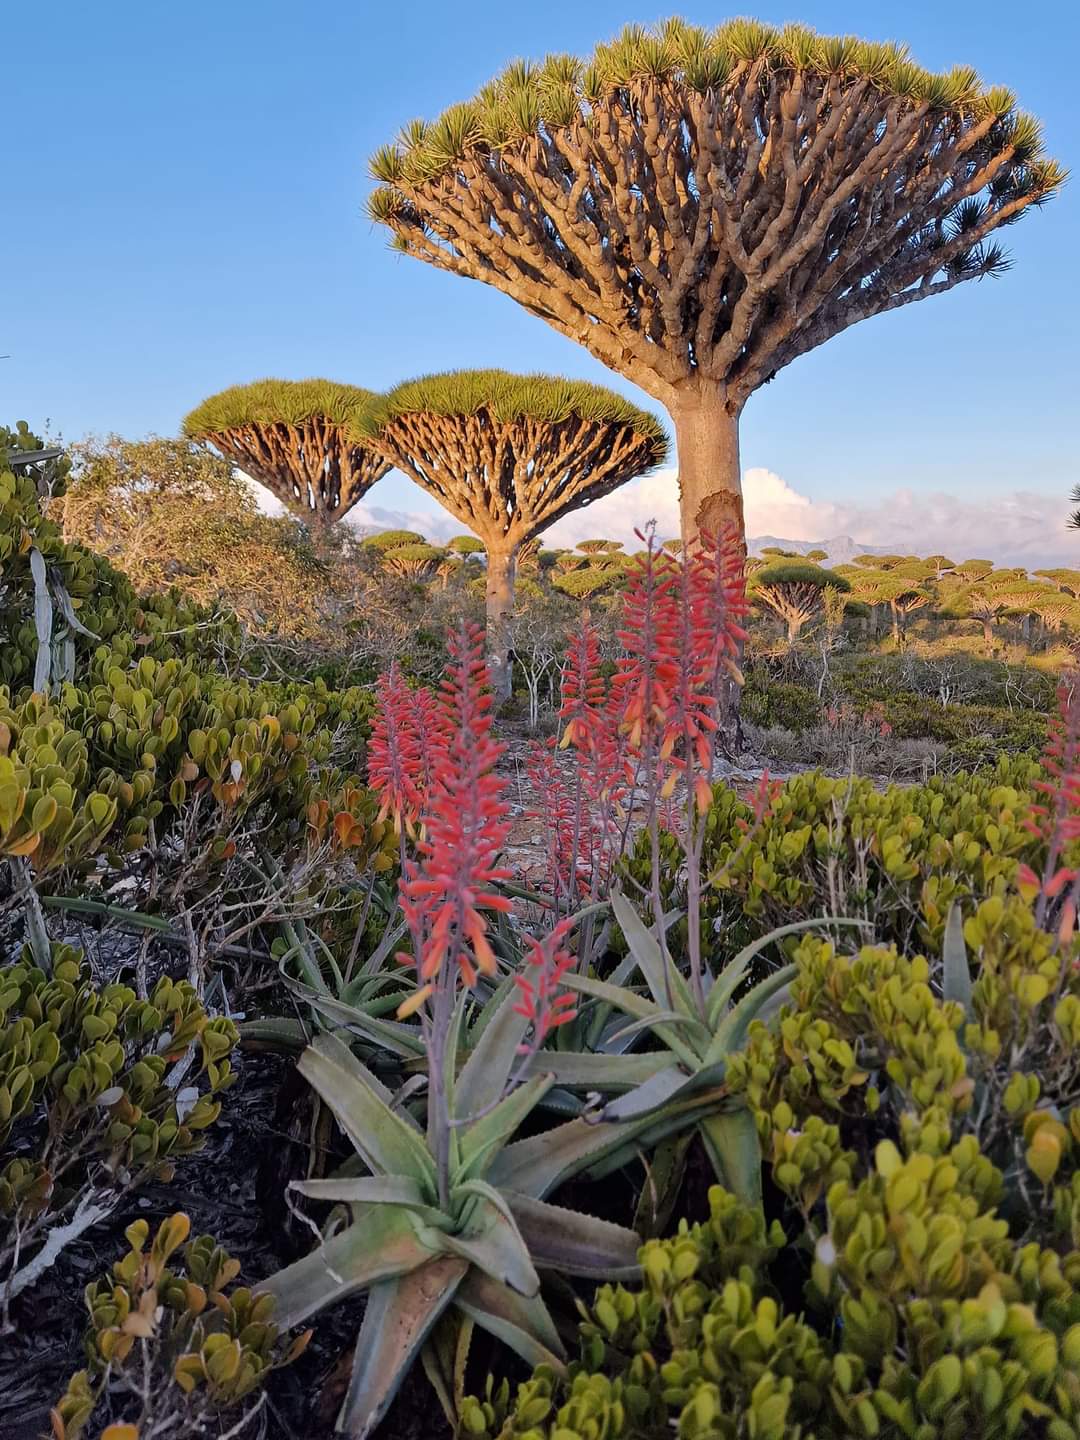 The beautiful fauna of Socotra